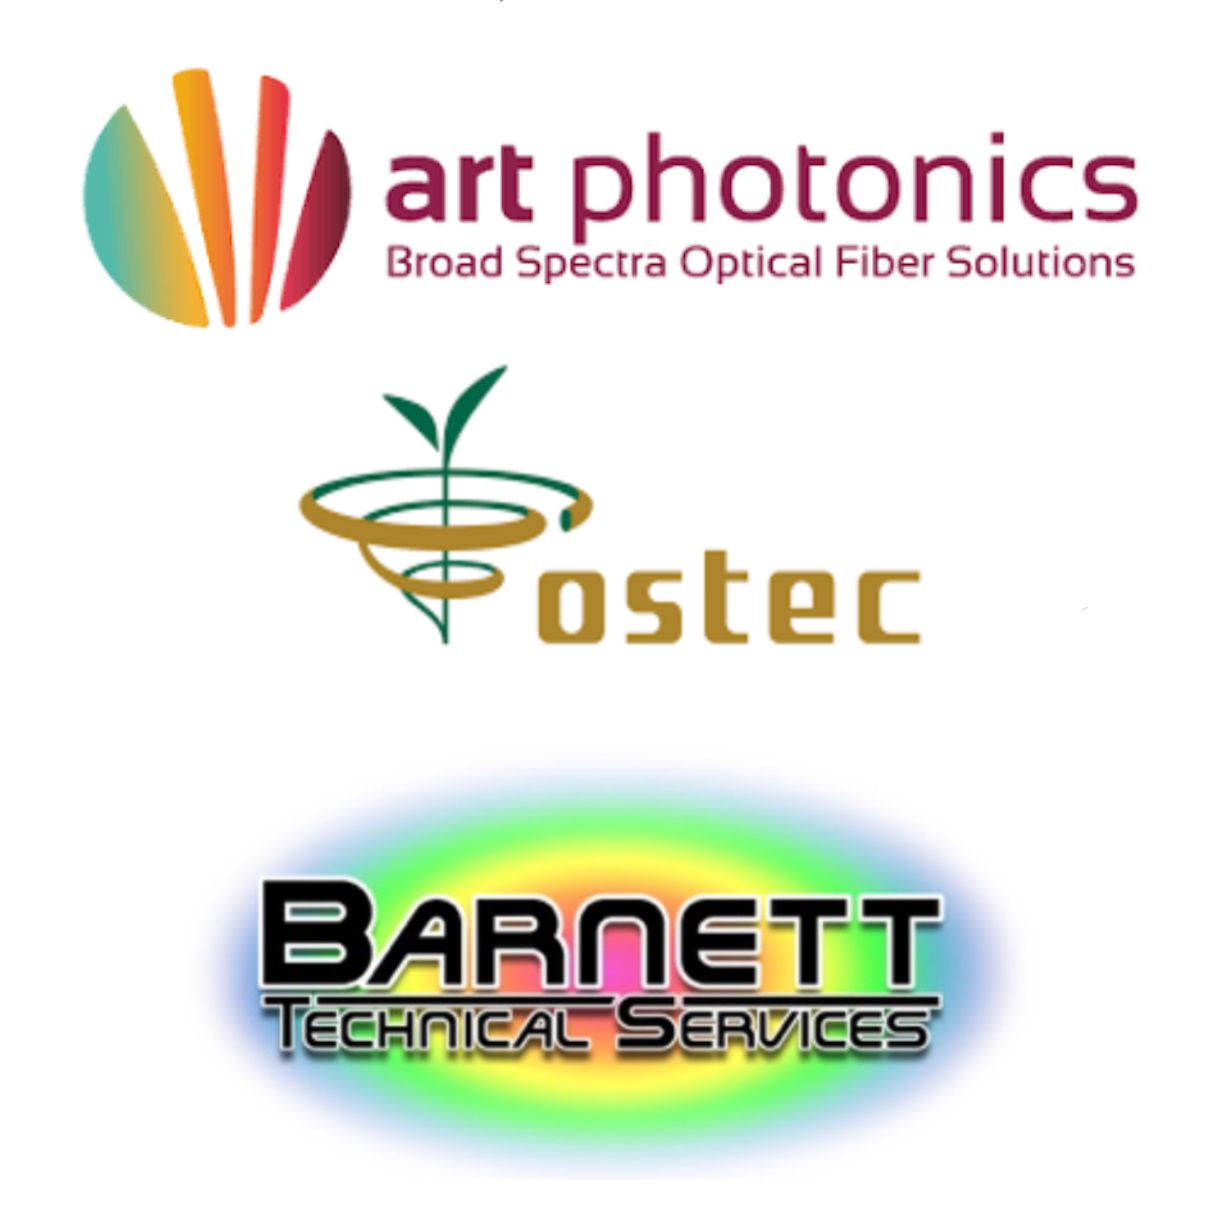 art photonics GmbH, Ostec and Barnett Technical Services Announce Partnership